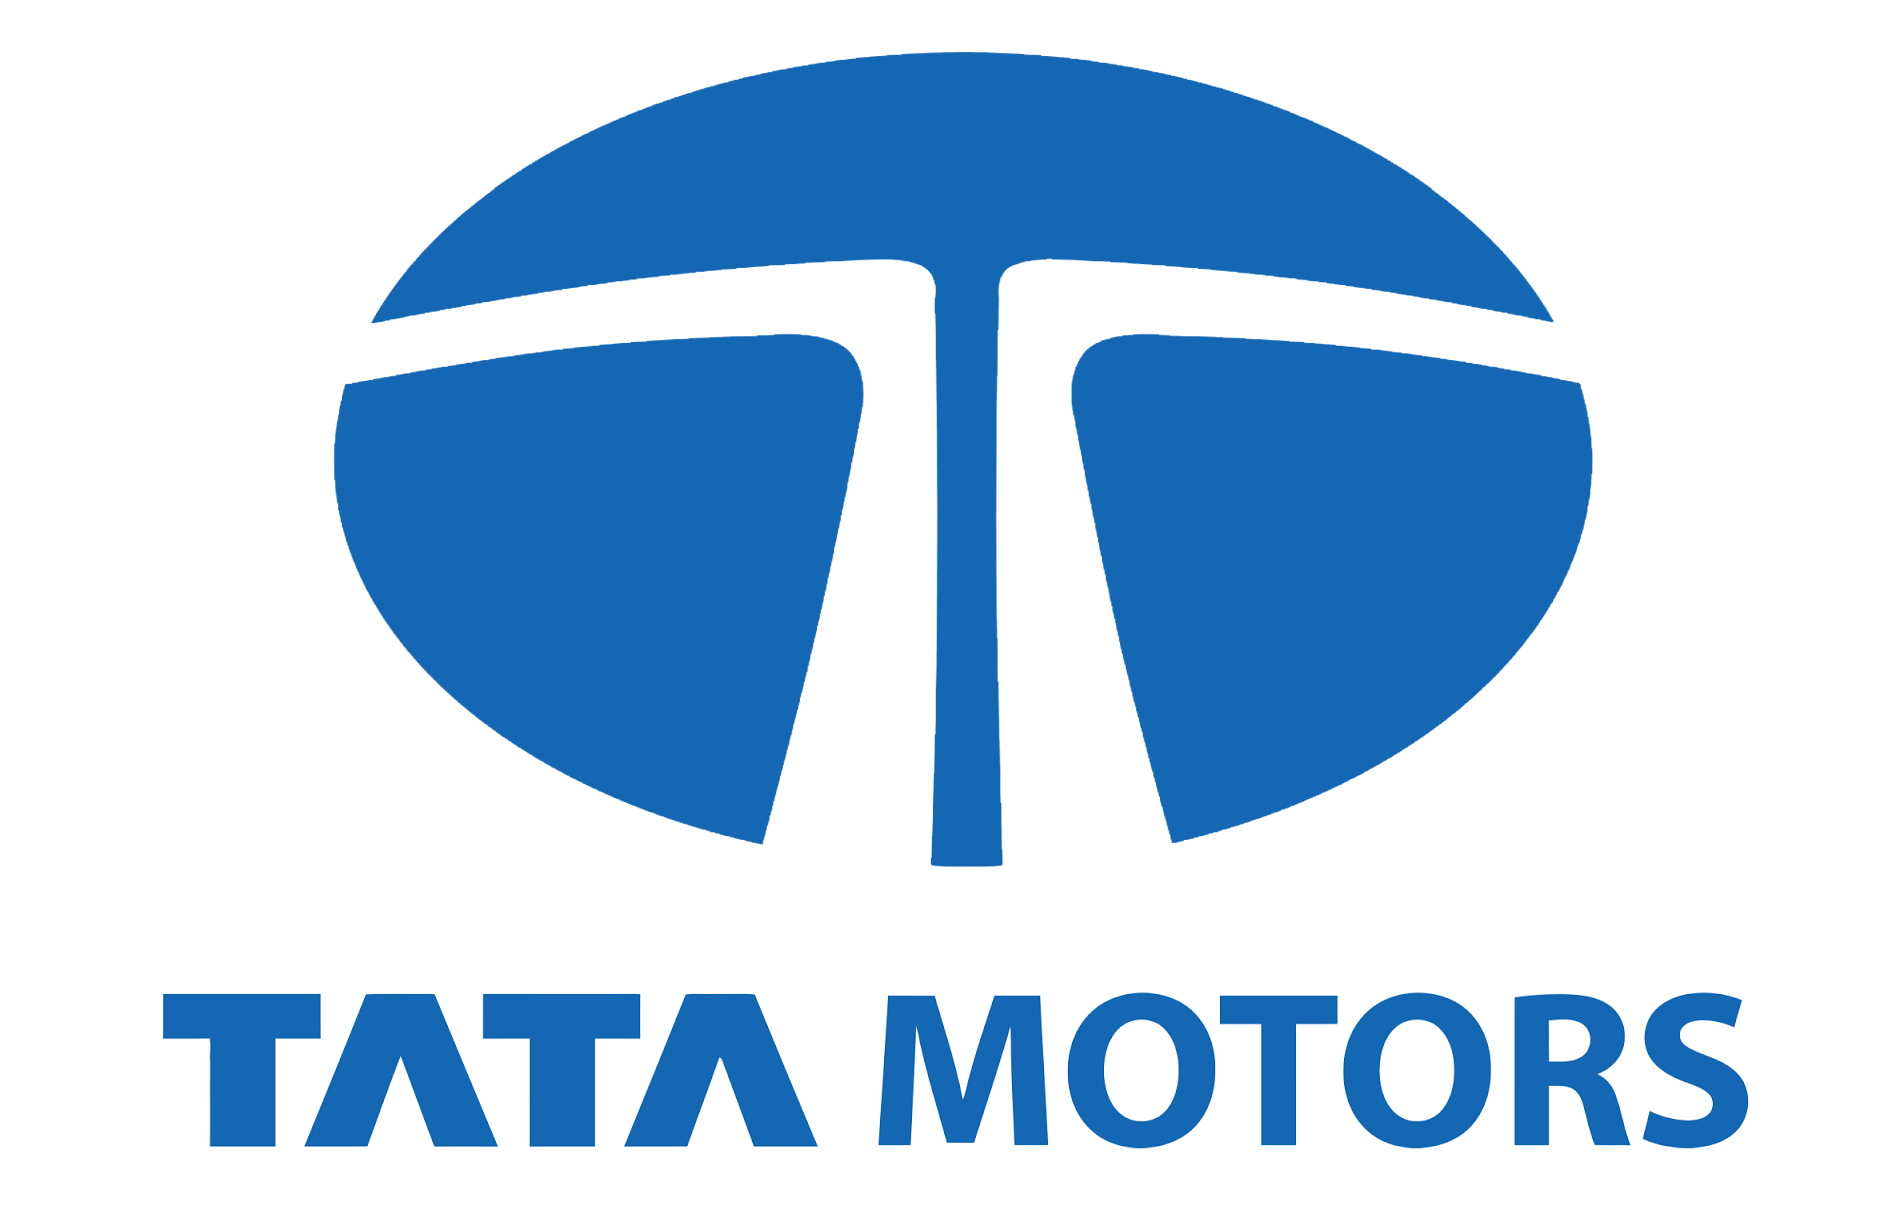 Tata Motors Cars Showroom - Schakralaya Motors Pvt Ltd|Show Room|Automotive